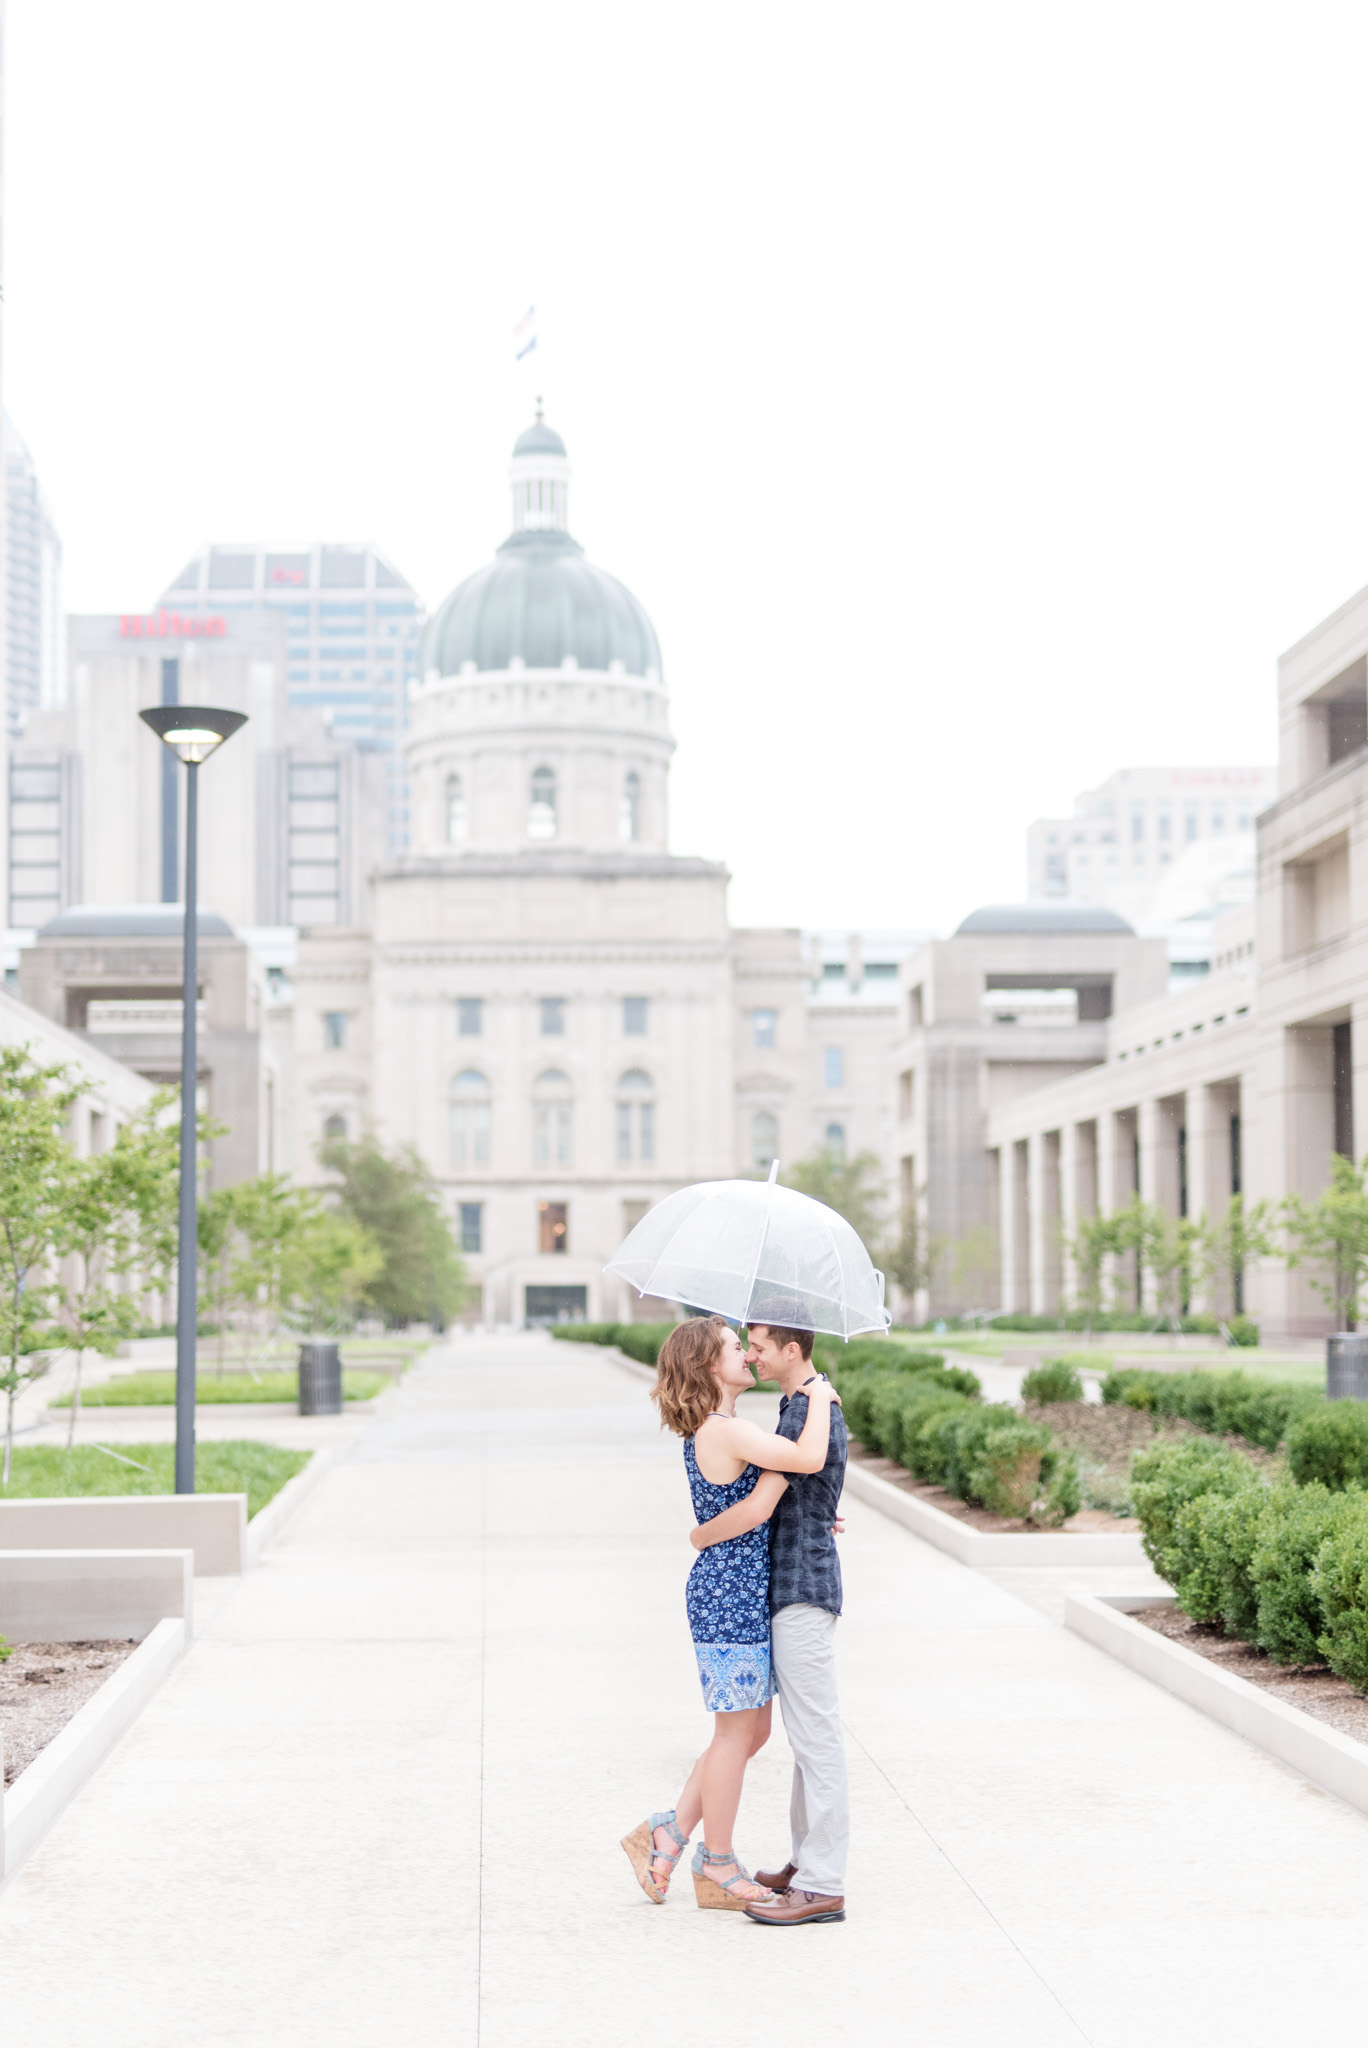 Couple kisses under umbrella.